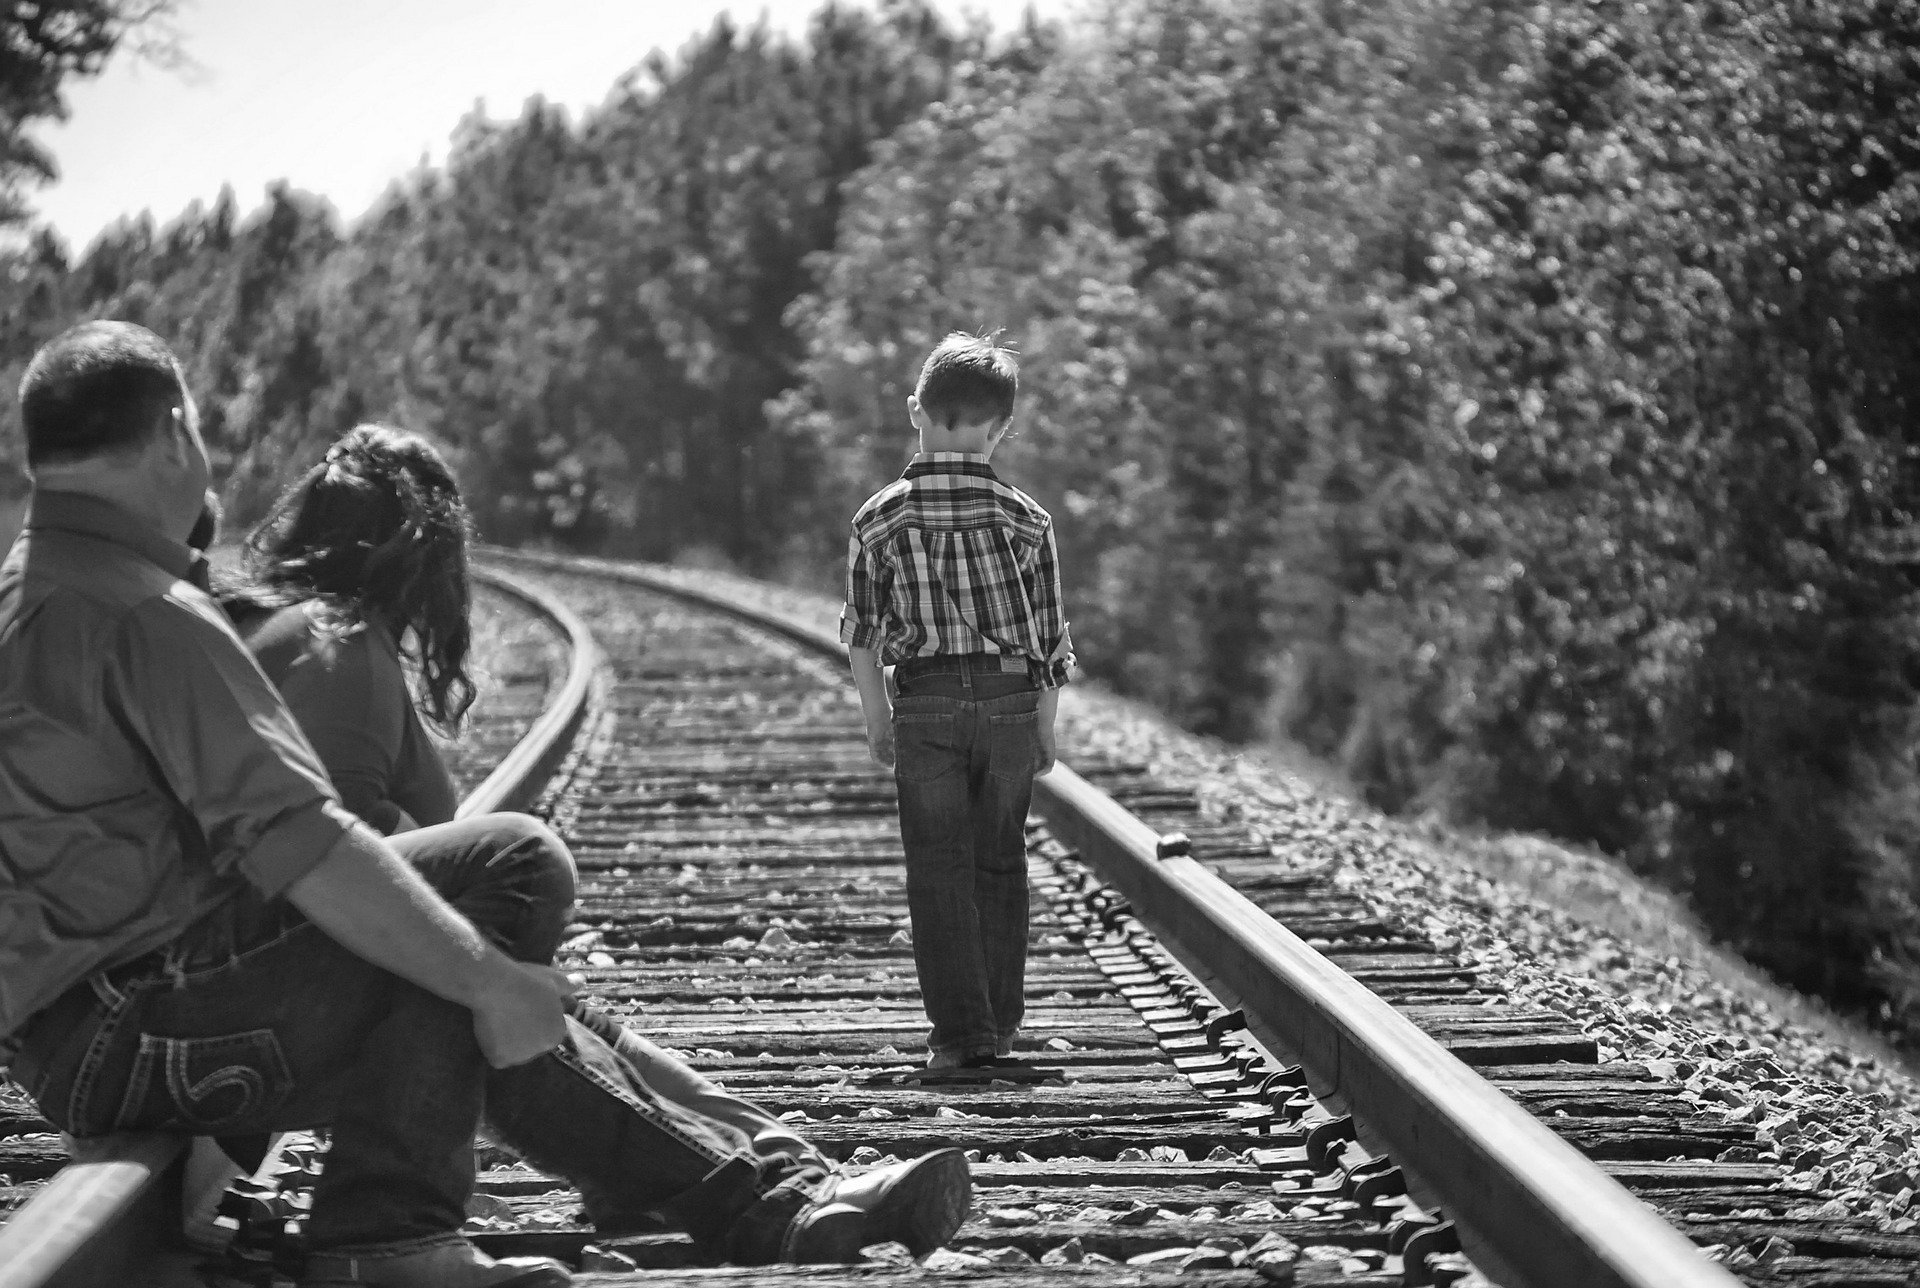 Family on a Railroad - VeteranCarDonations.org